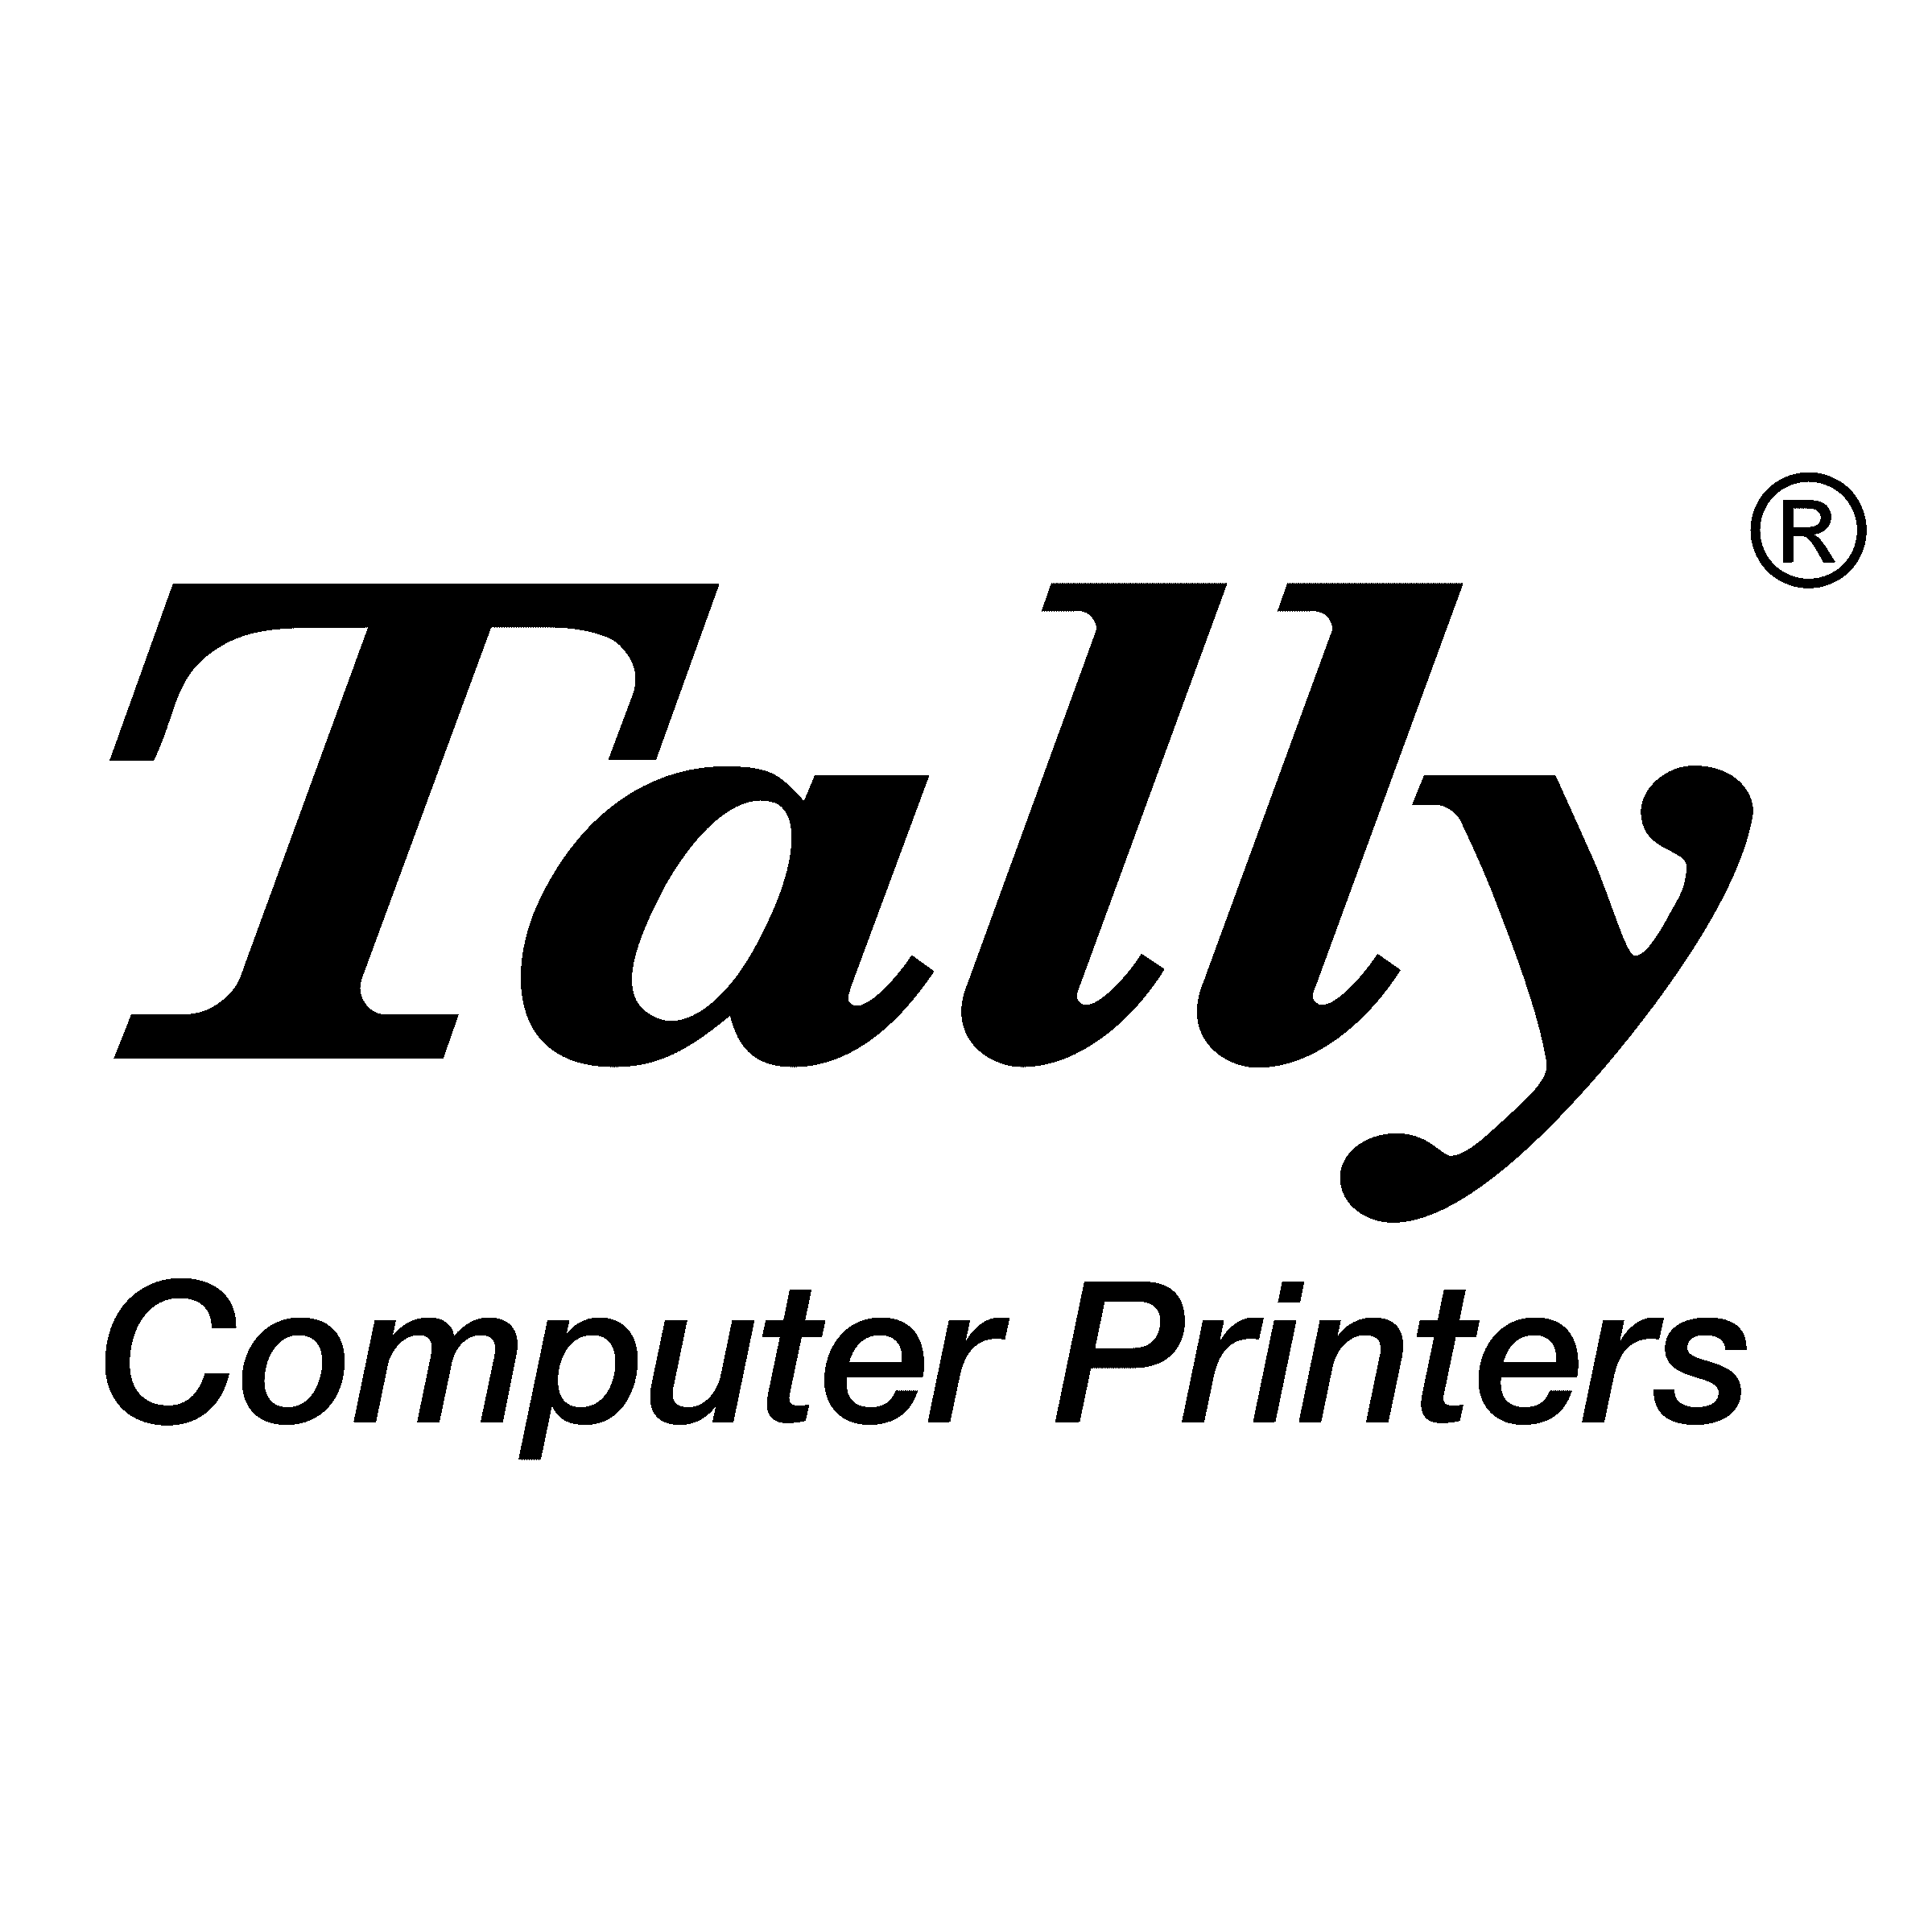 tally-1-logo-png-transparent (1).png (16 KB)